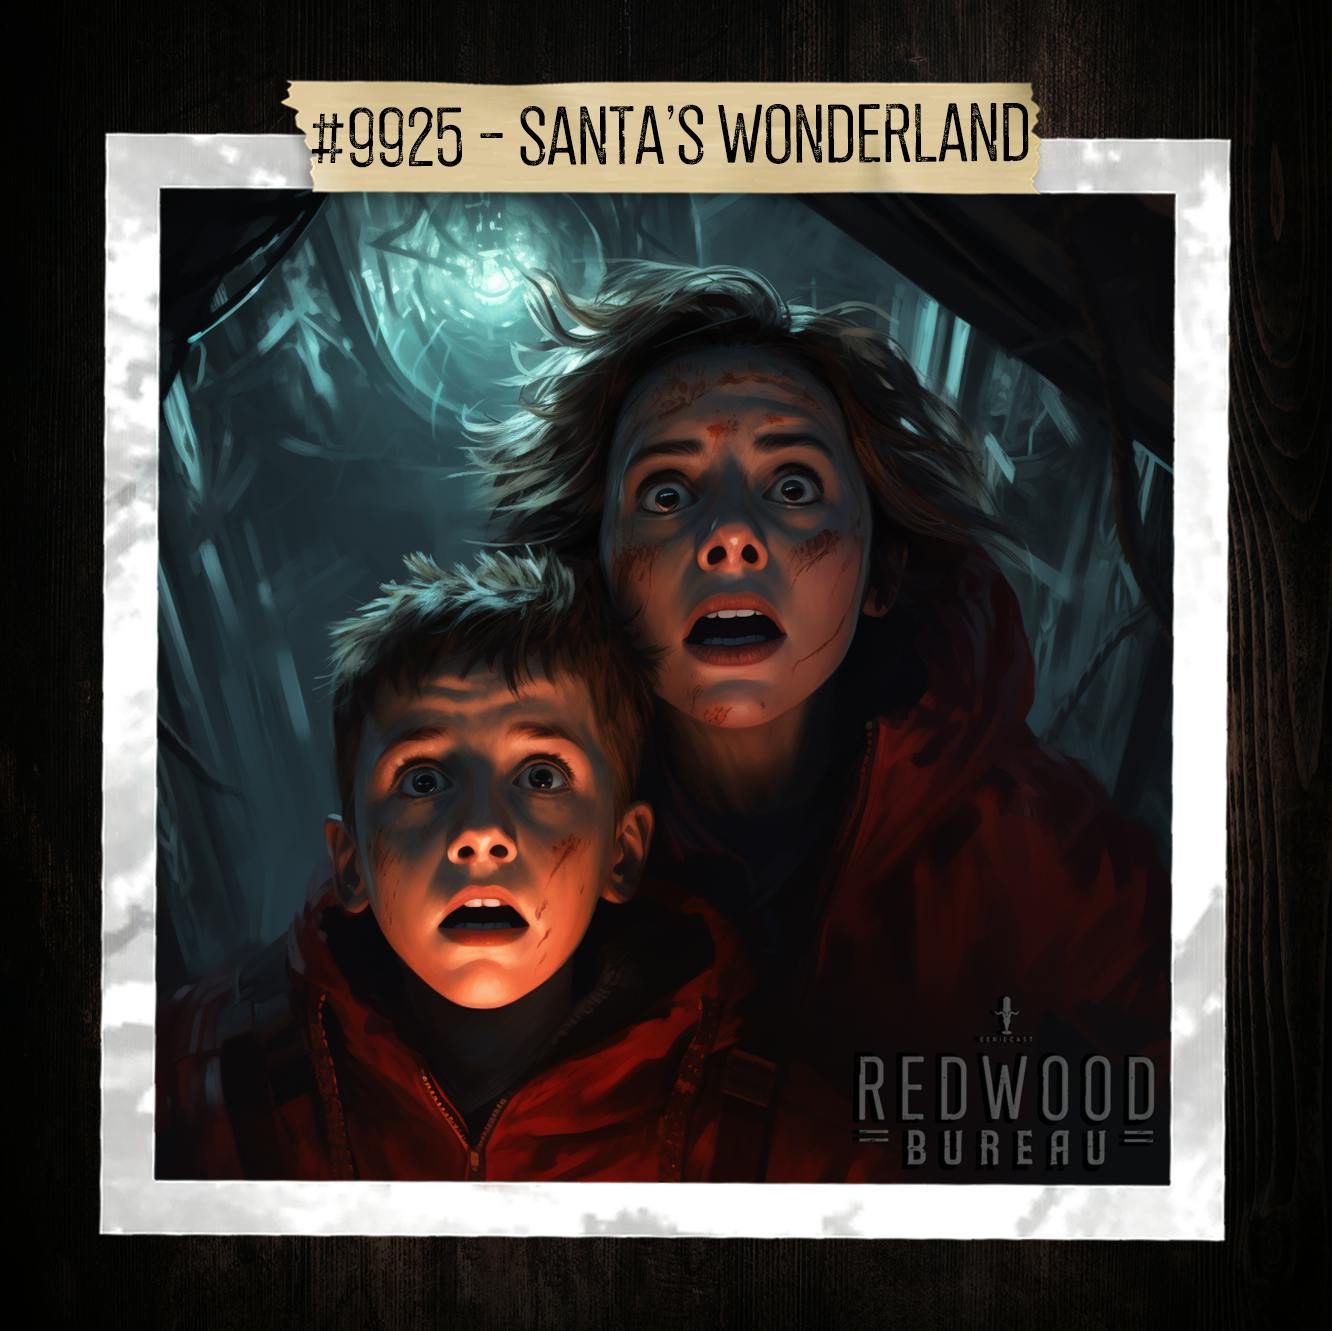 "SANTA'S WONDERLAND" - Redwood Bureau Phenomenon #9925